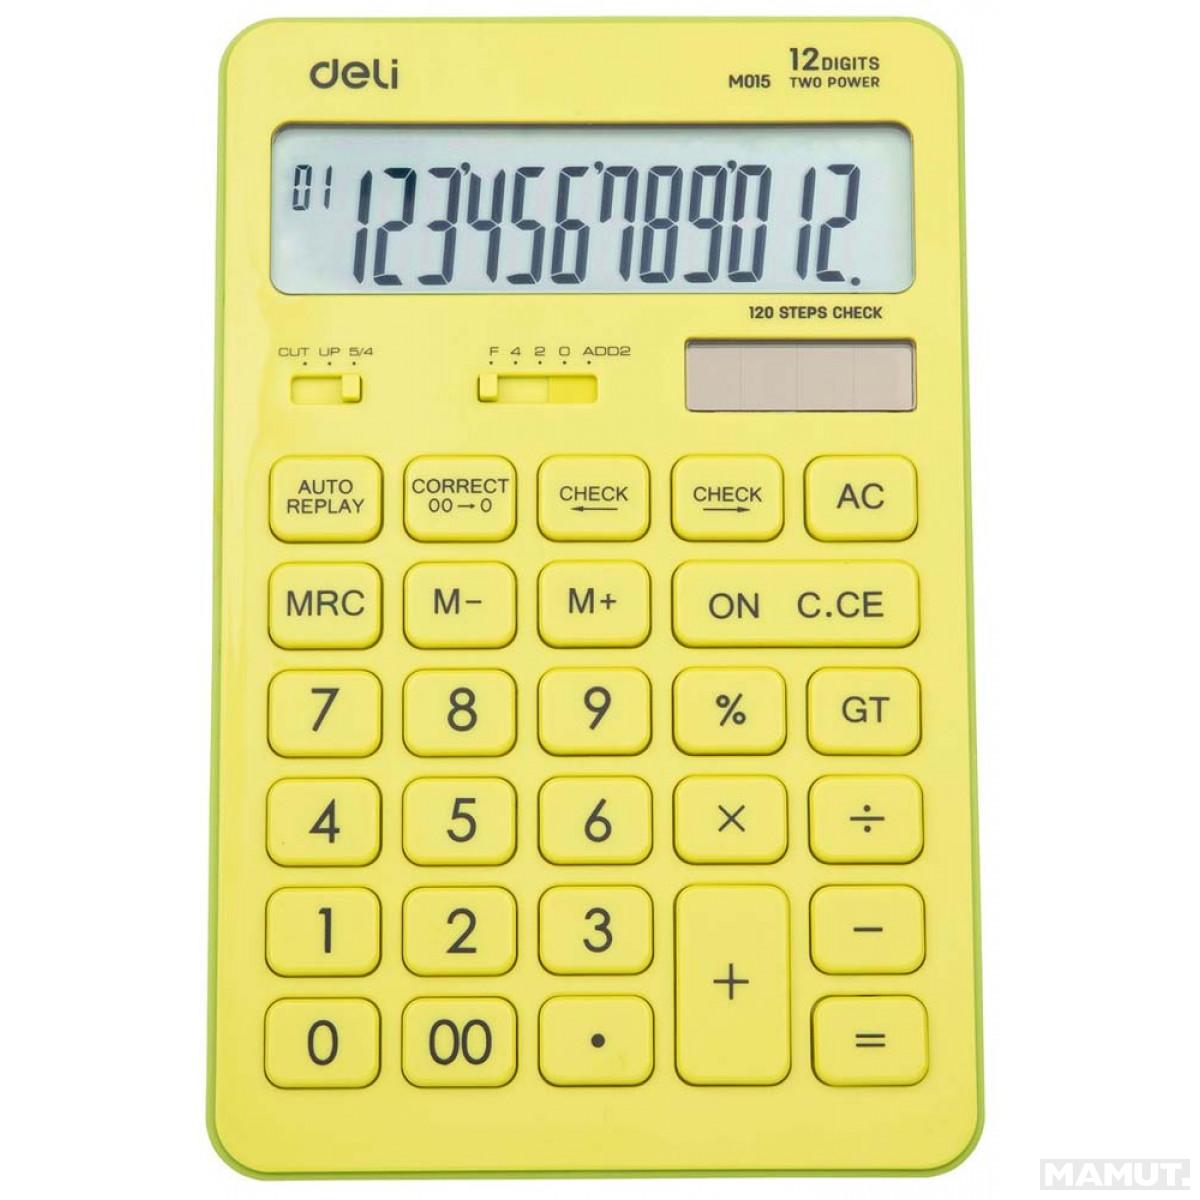 Ljubavni kalkulator igre Upiši imena: